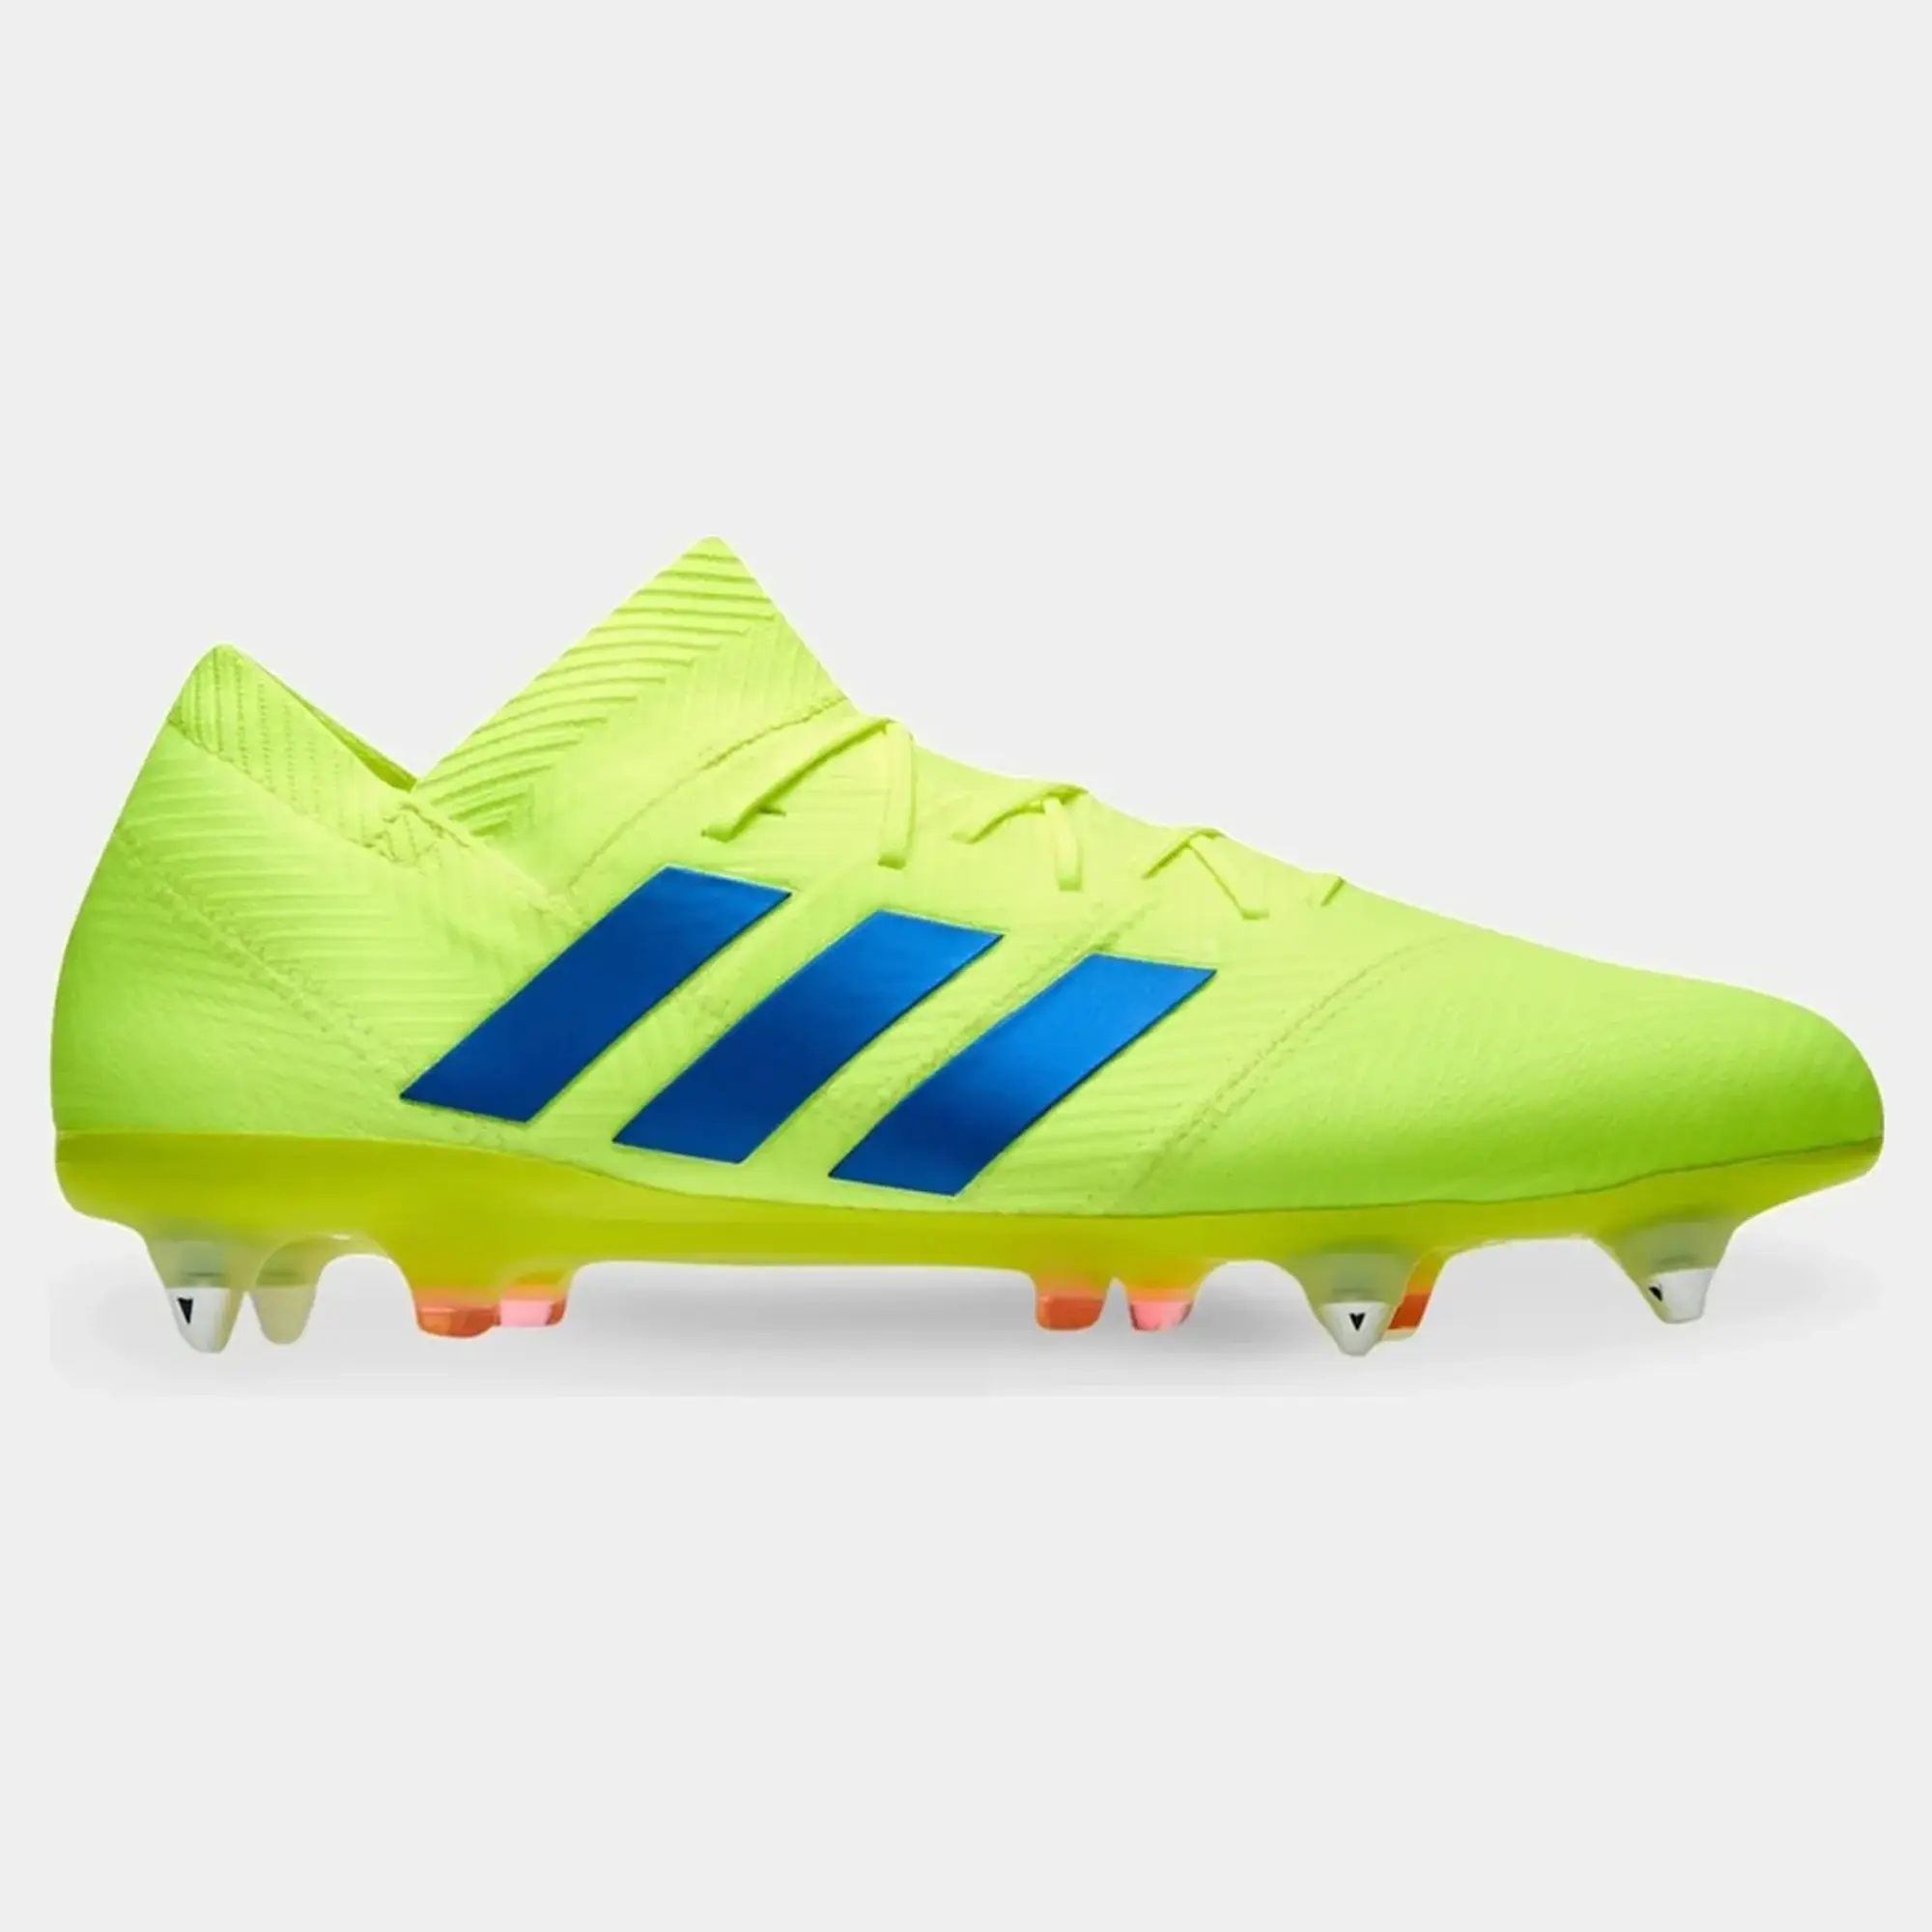 Adidas Nemeziz 18.1 Mens SG Football Boots